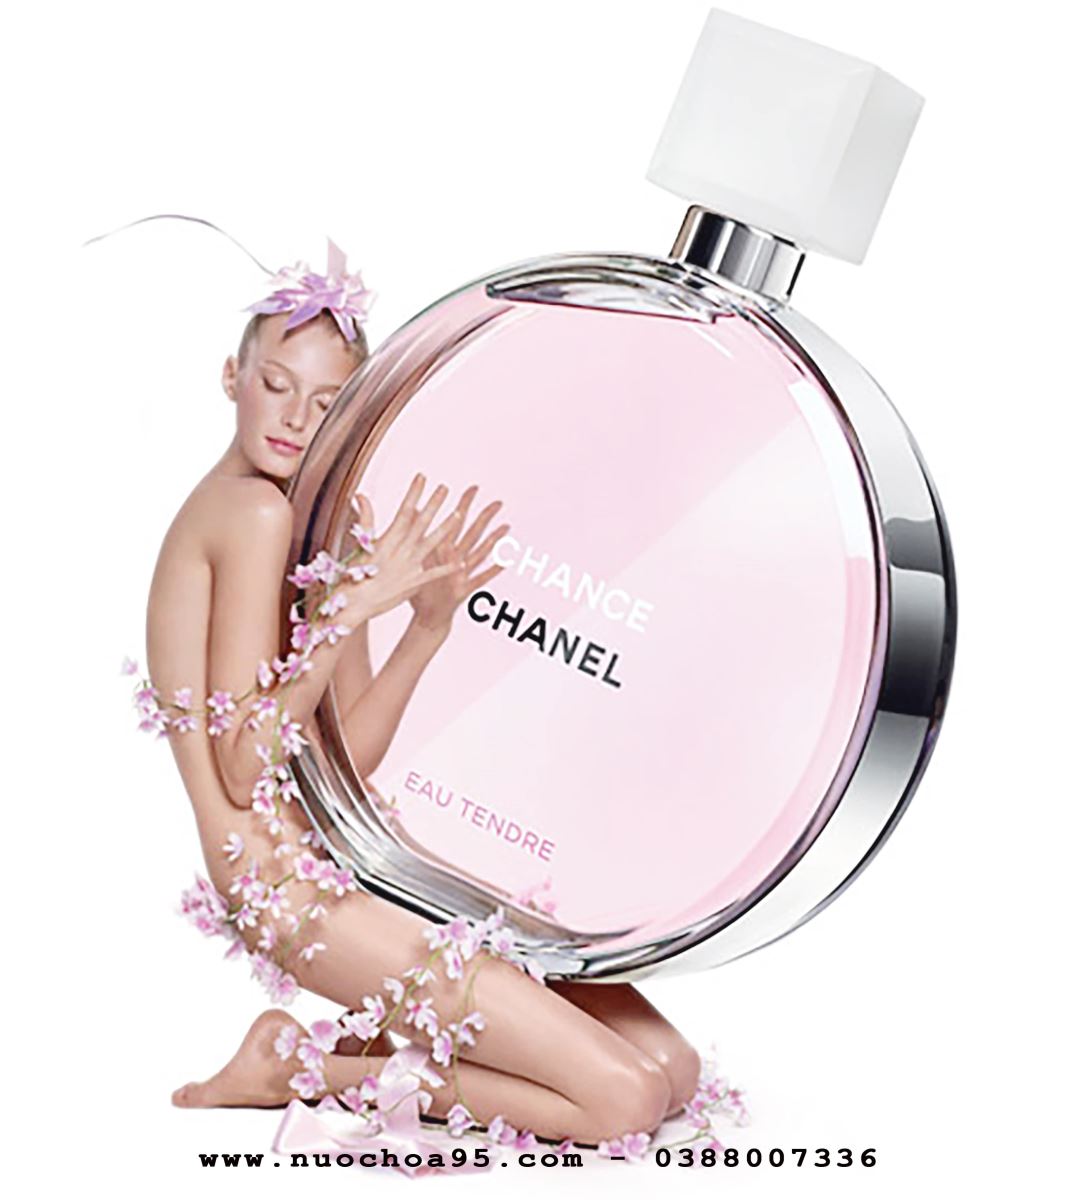 Отзывы о Chanel Chance Eau Tendre  Туалетная вода  Makeupua